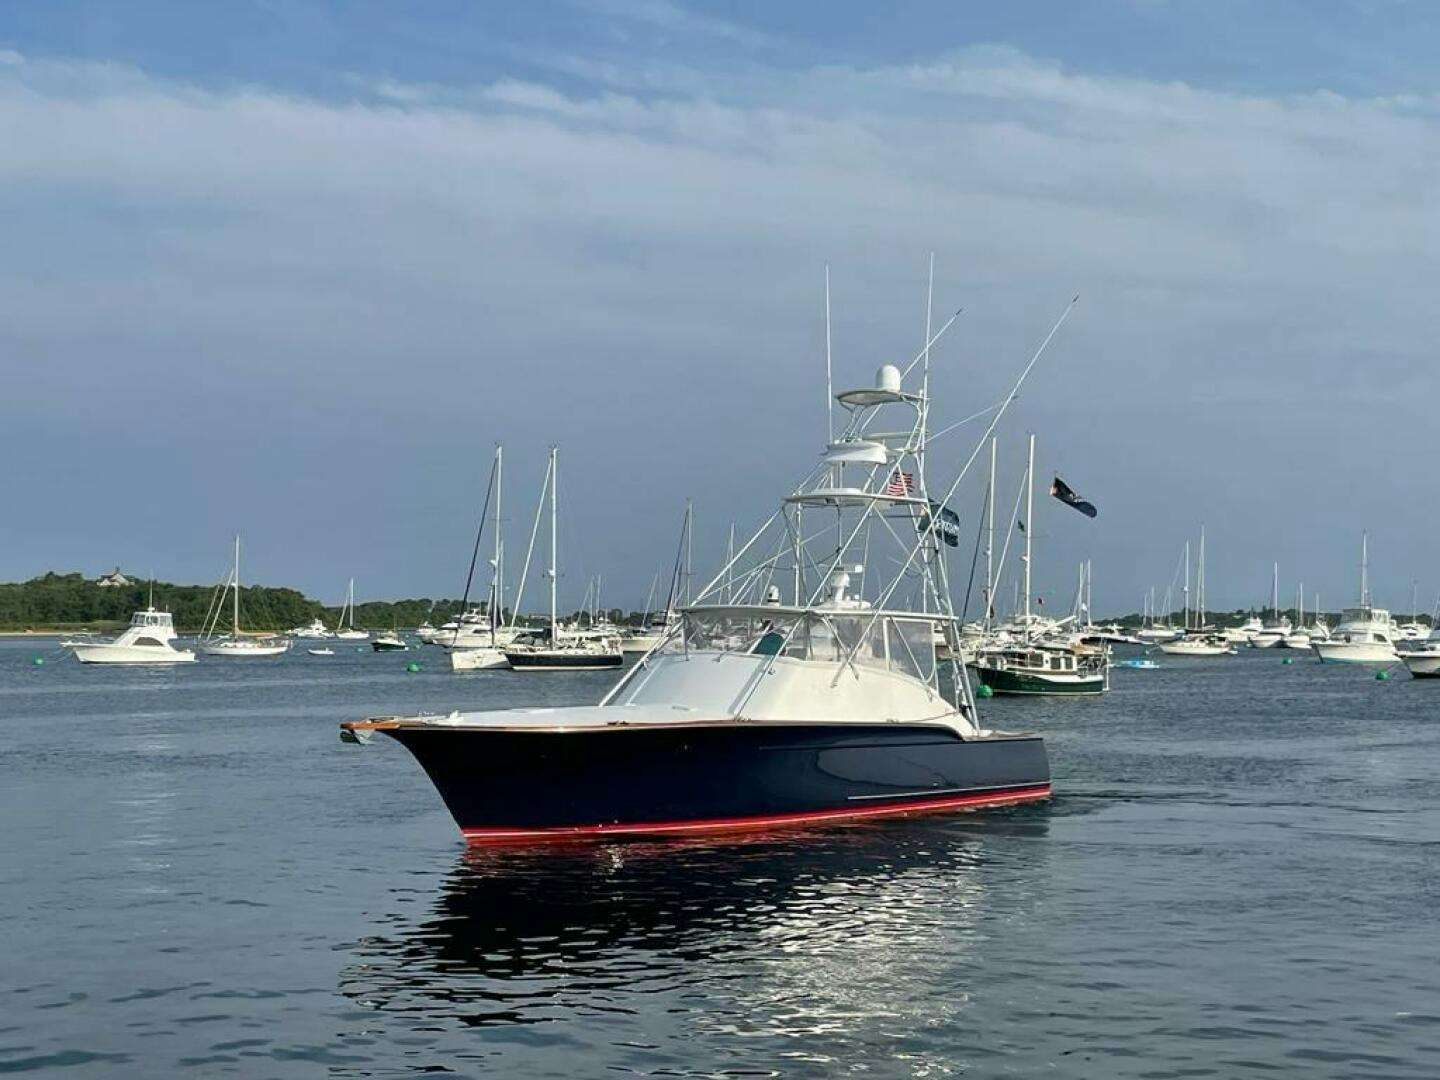 REEL RHINO Yacht for Sale in Rhode Island, 52' (15.85m) 2006 Buddy Davis